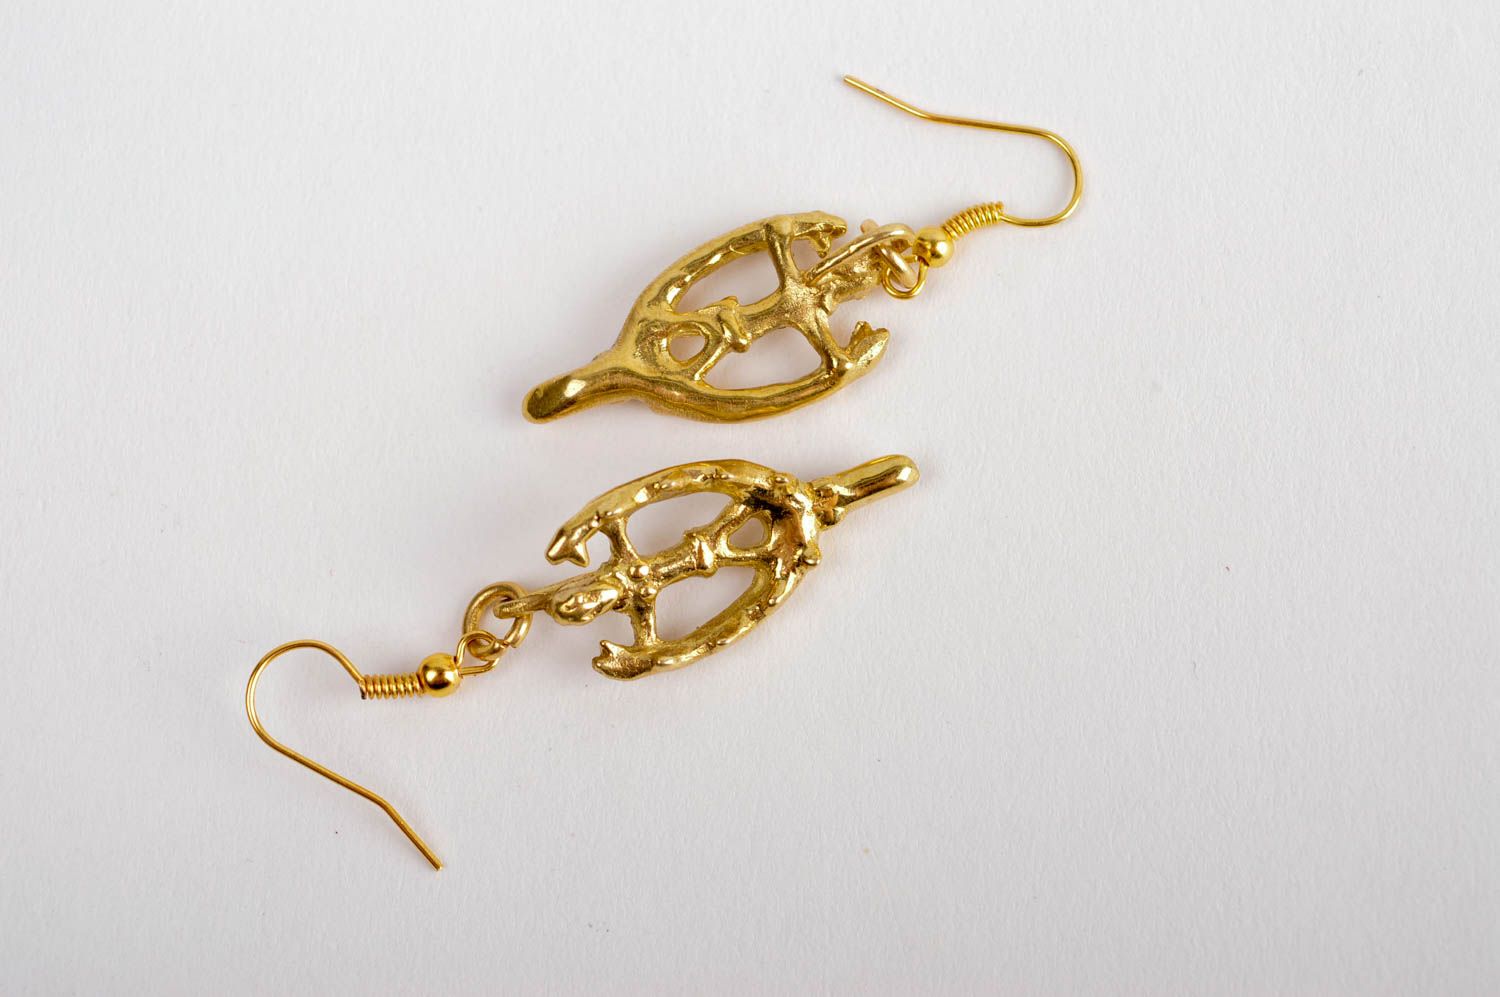 Long earrings fashion accessories designer jewelry handmade earrings gift ideas photo 5